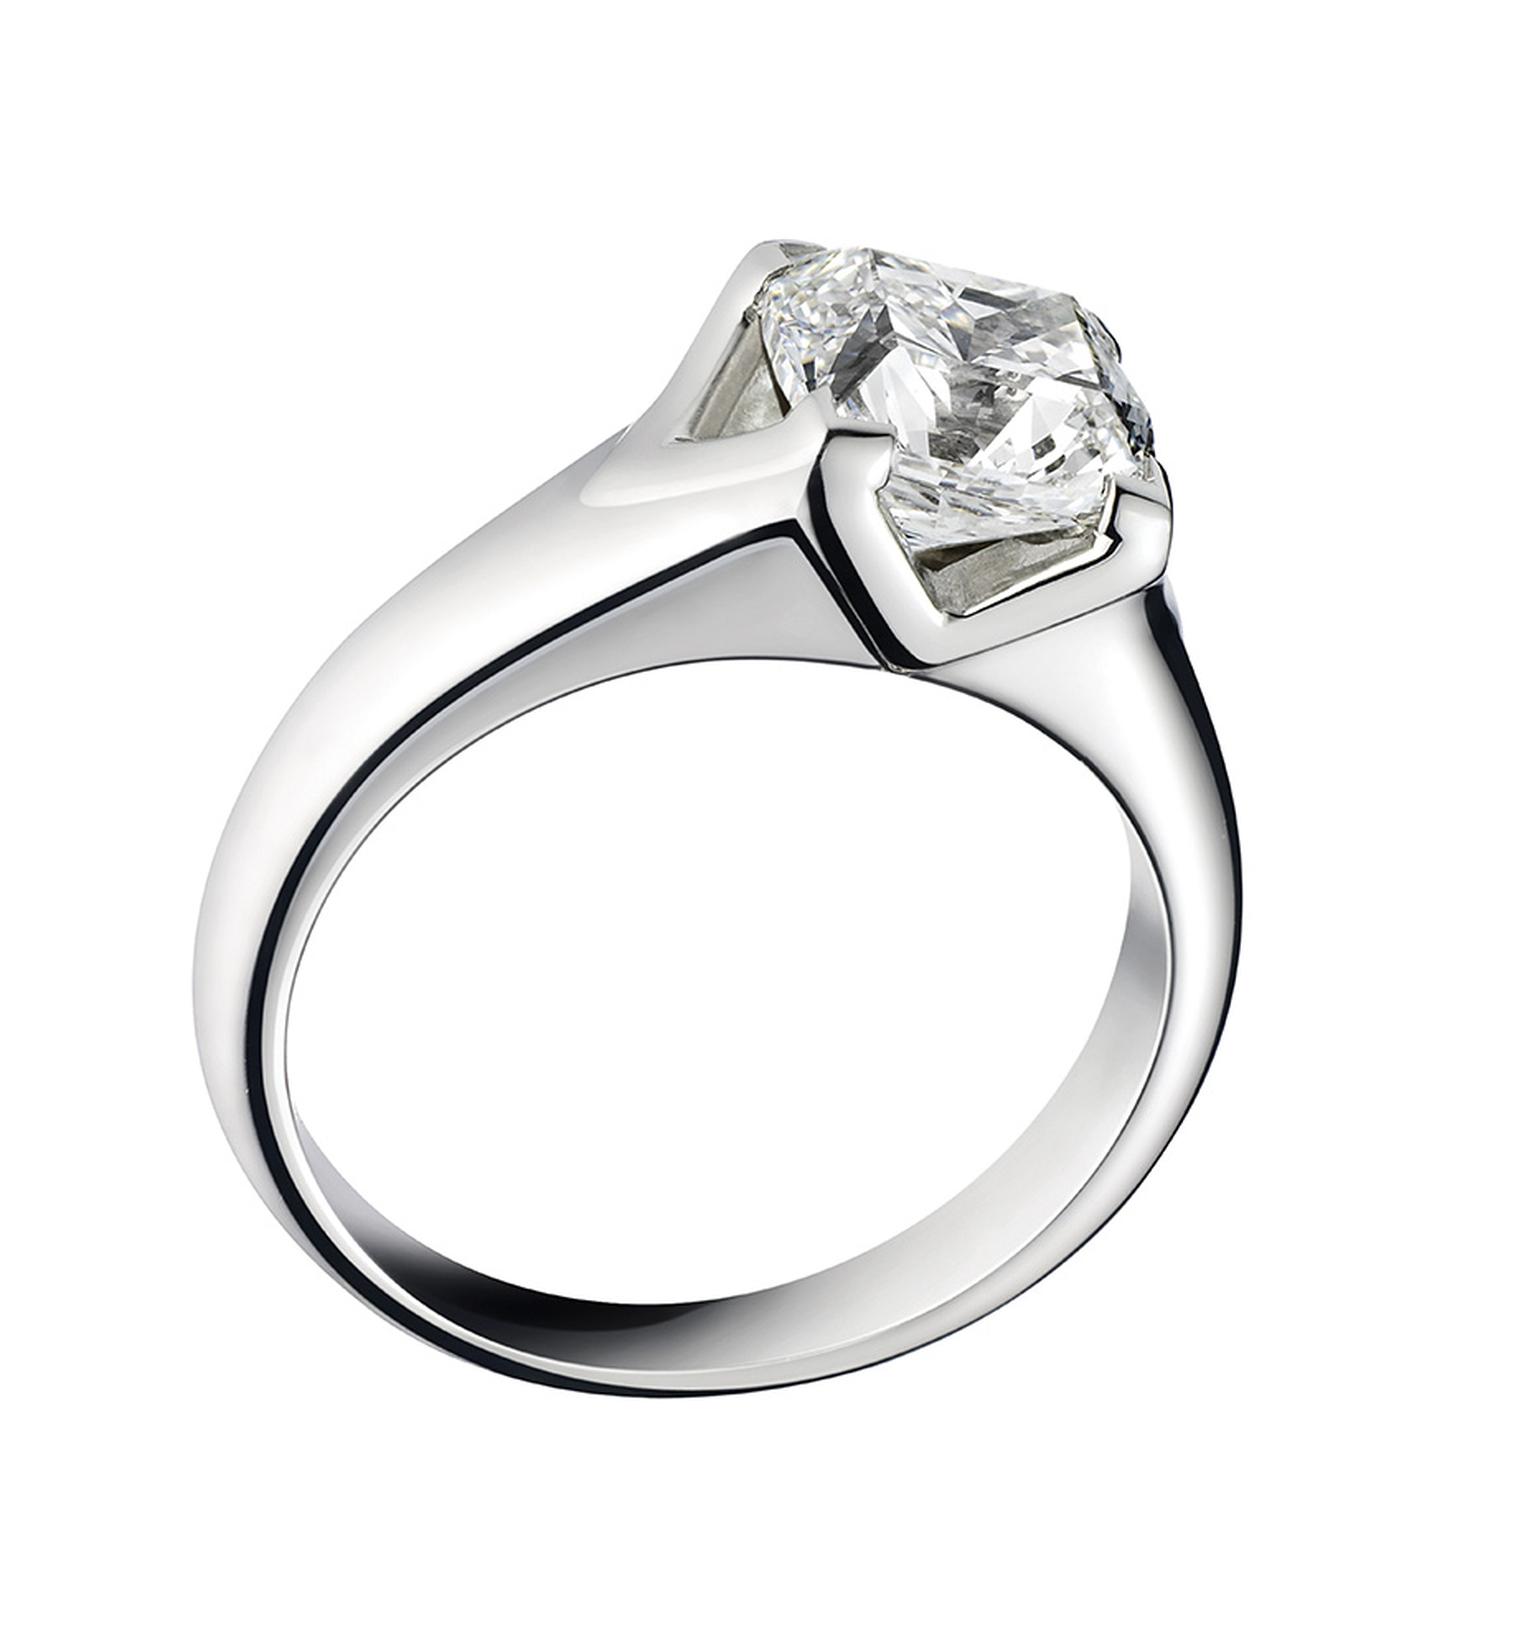 Asprey Cut diamond engagement ring